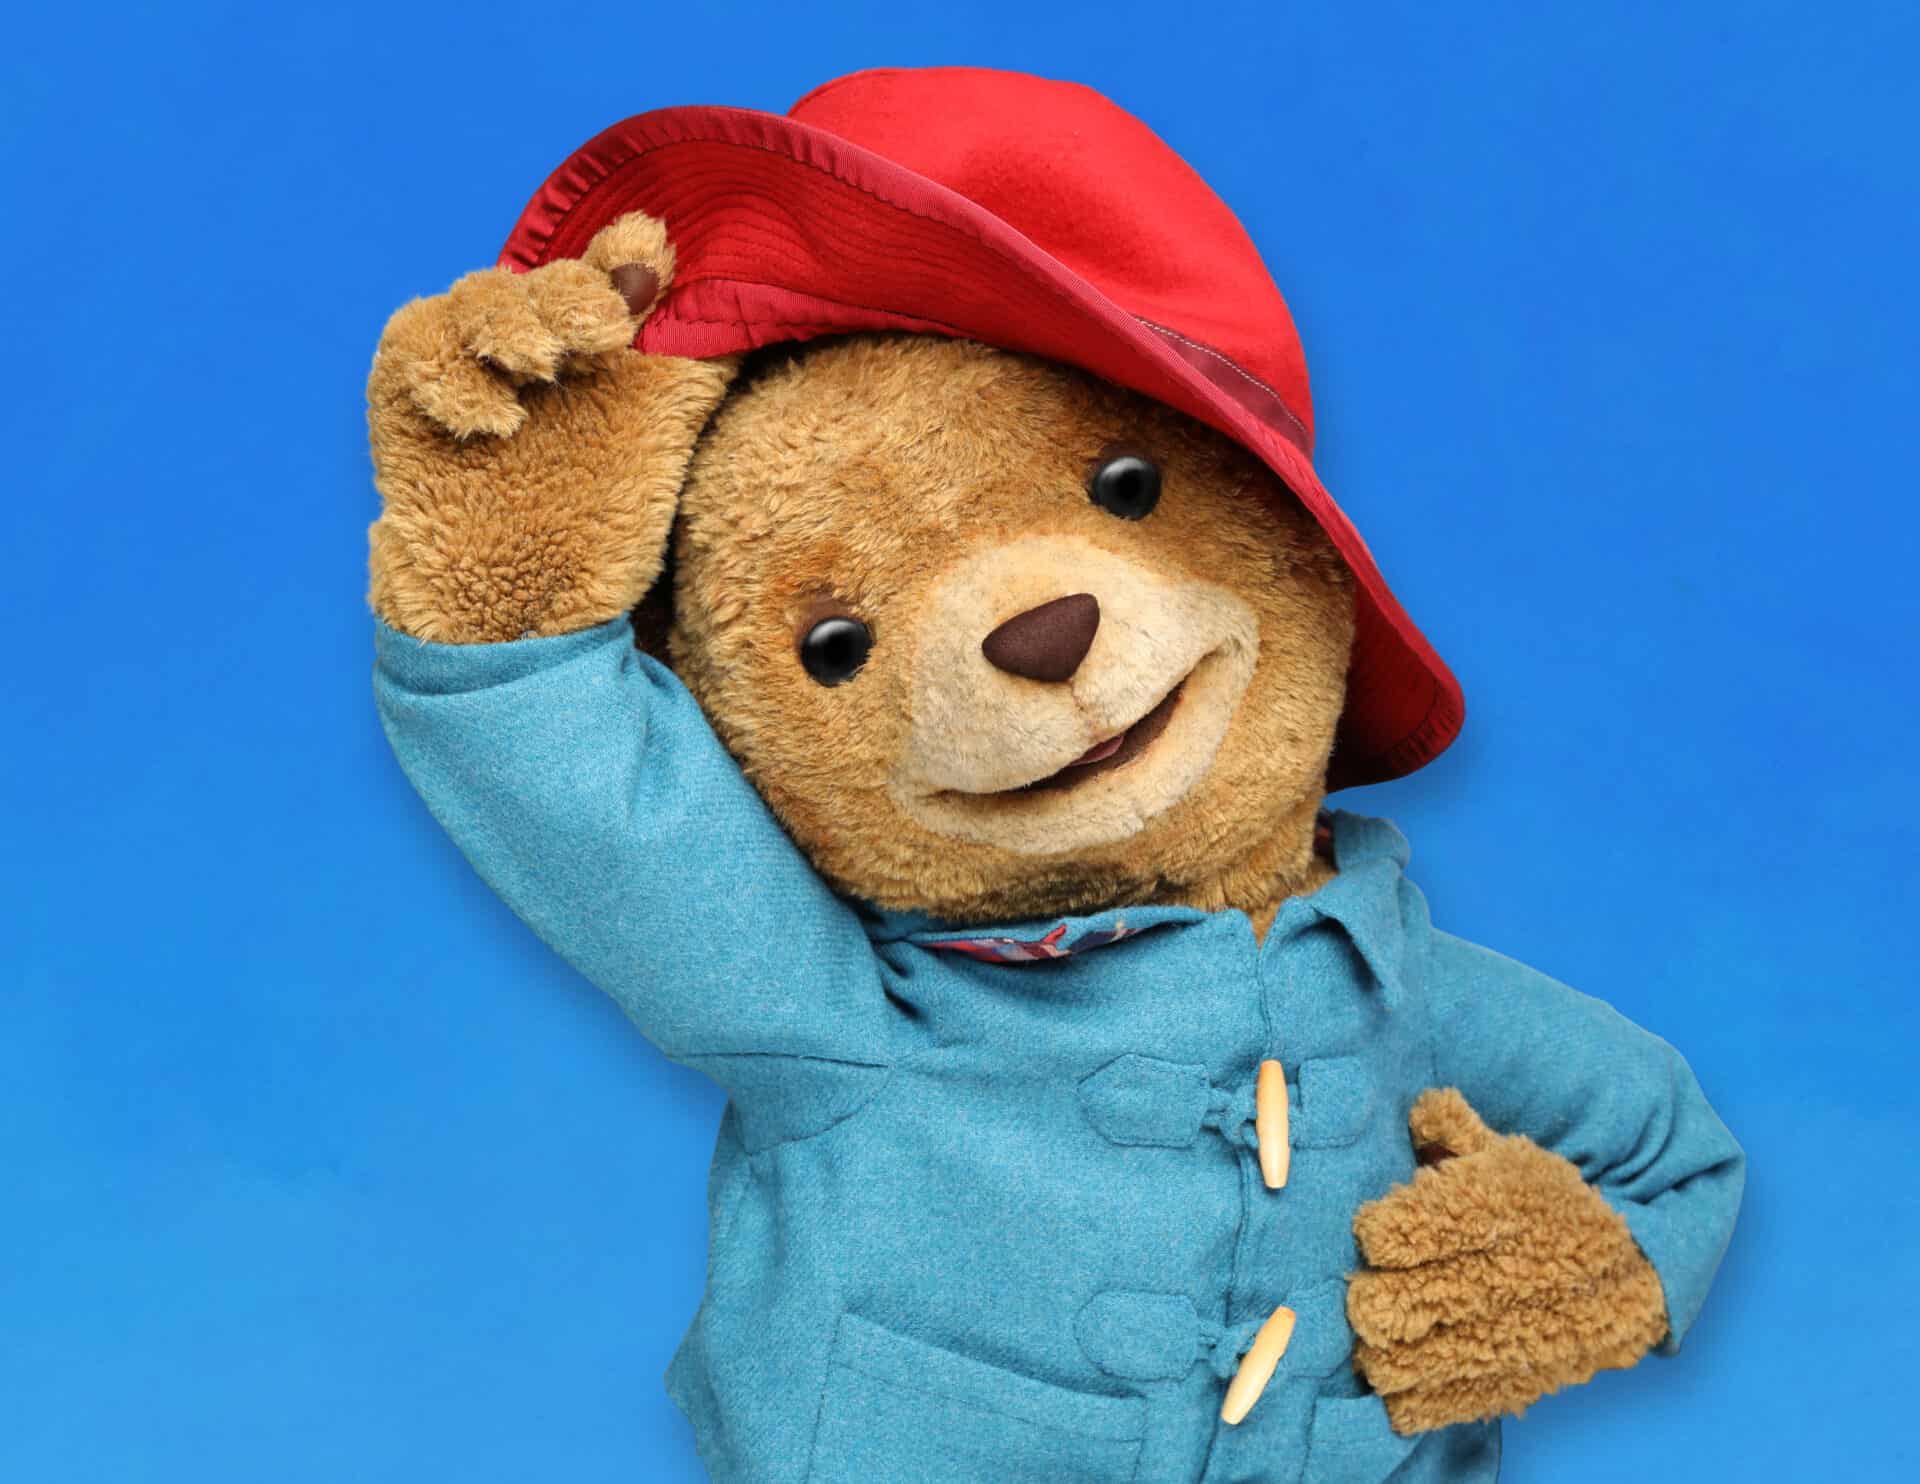 Puppet of Paddington Bear lifting up red hat